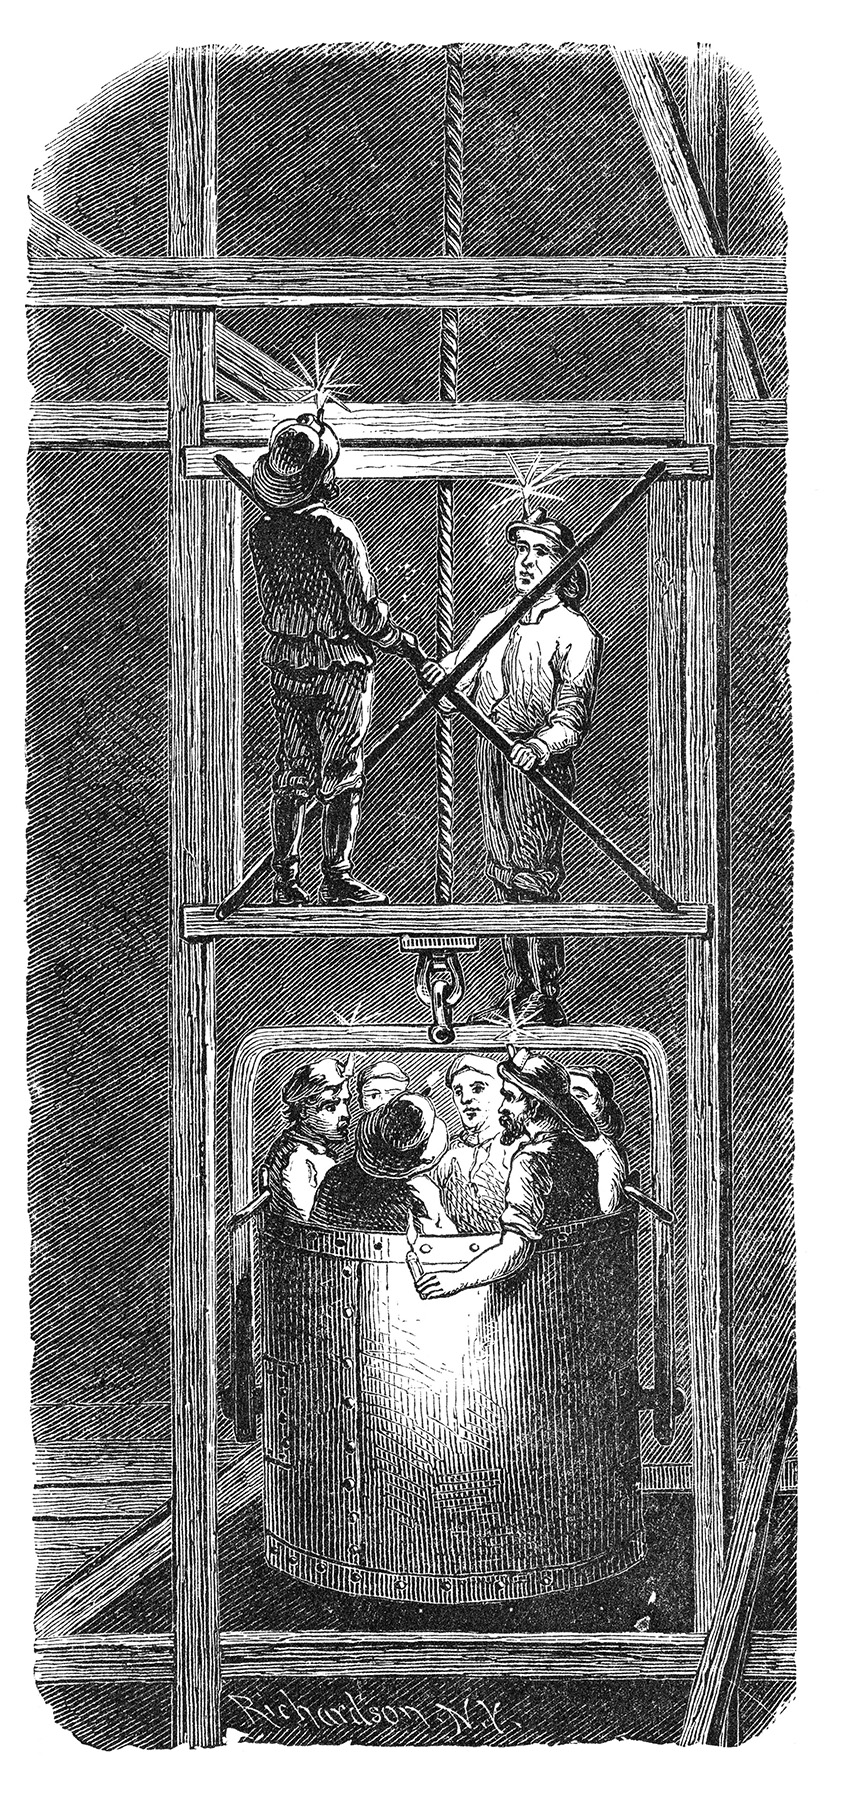 Men in a metal bucket descend through a shaft. 